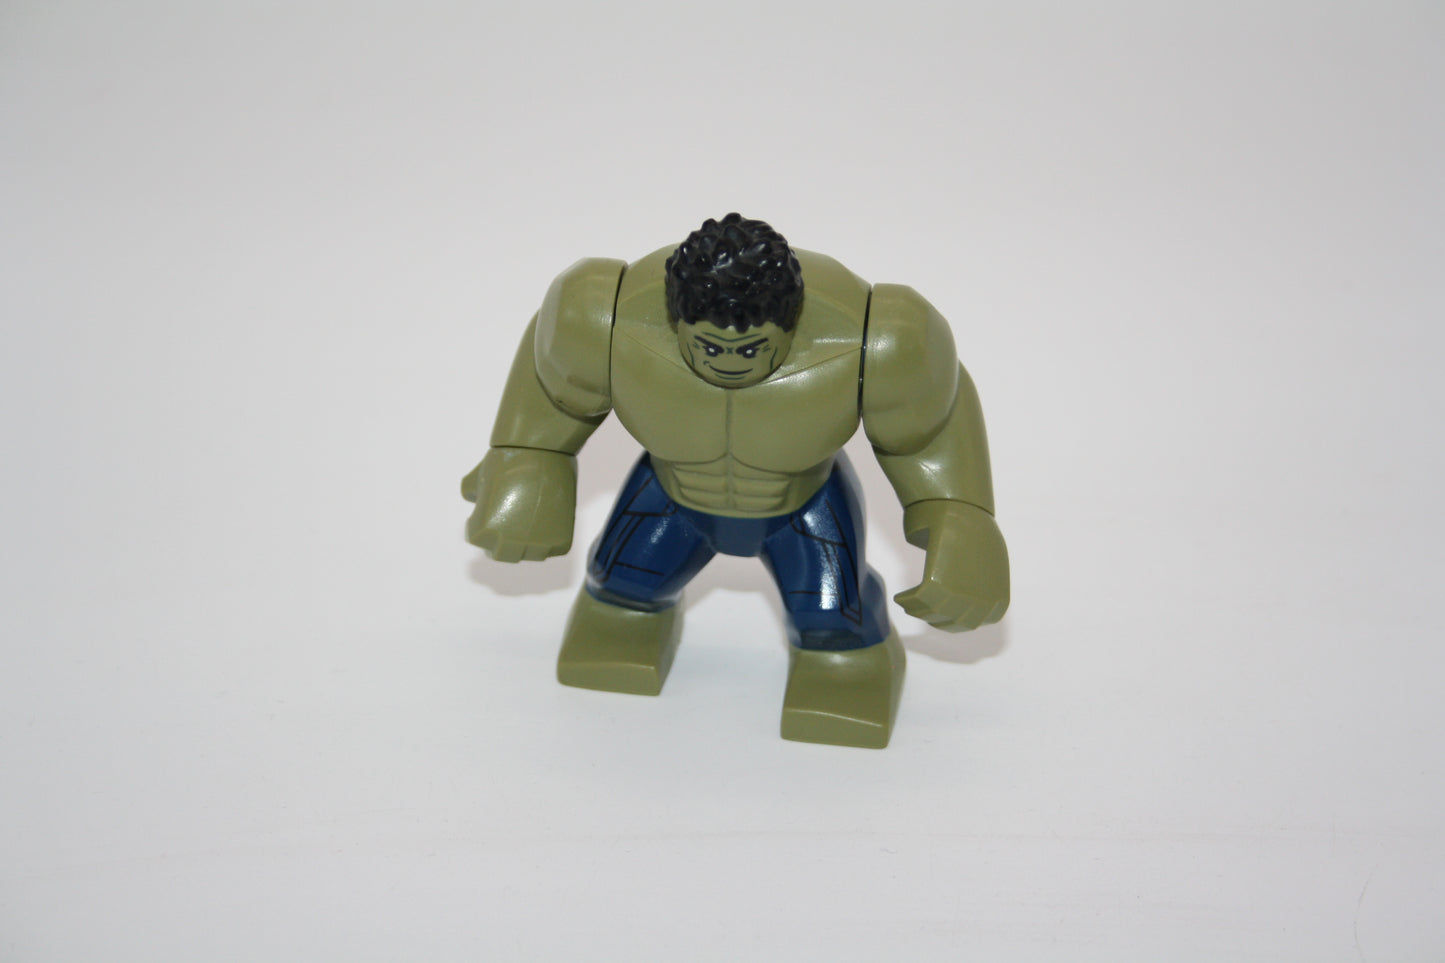 LEGO® Marvel/DC - Hulk Figur in blauer Hose - aus Set 76131 - Figuren/Minifiguren